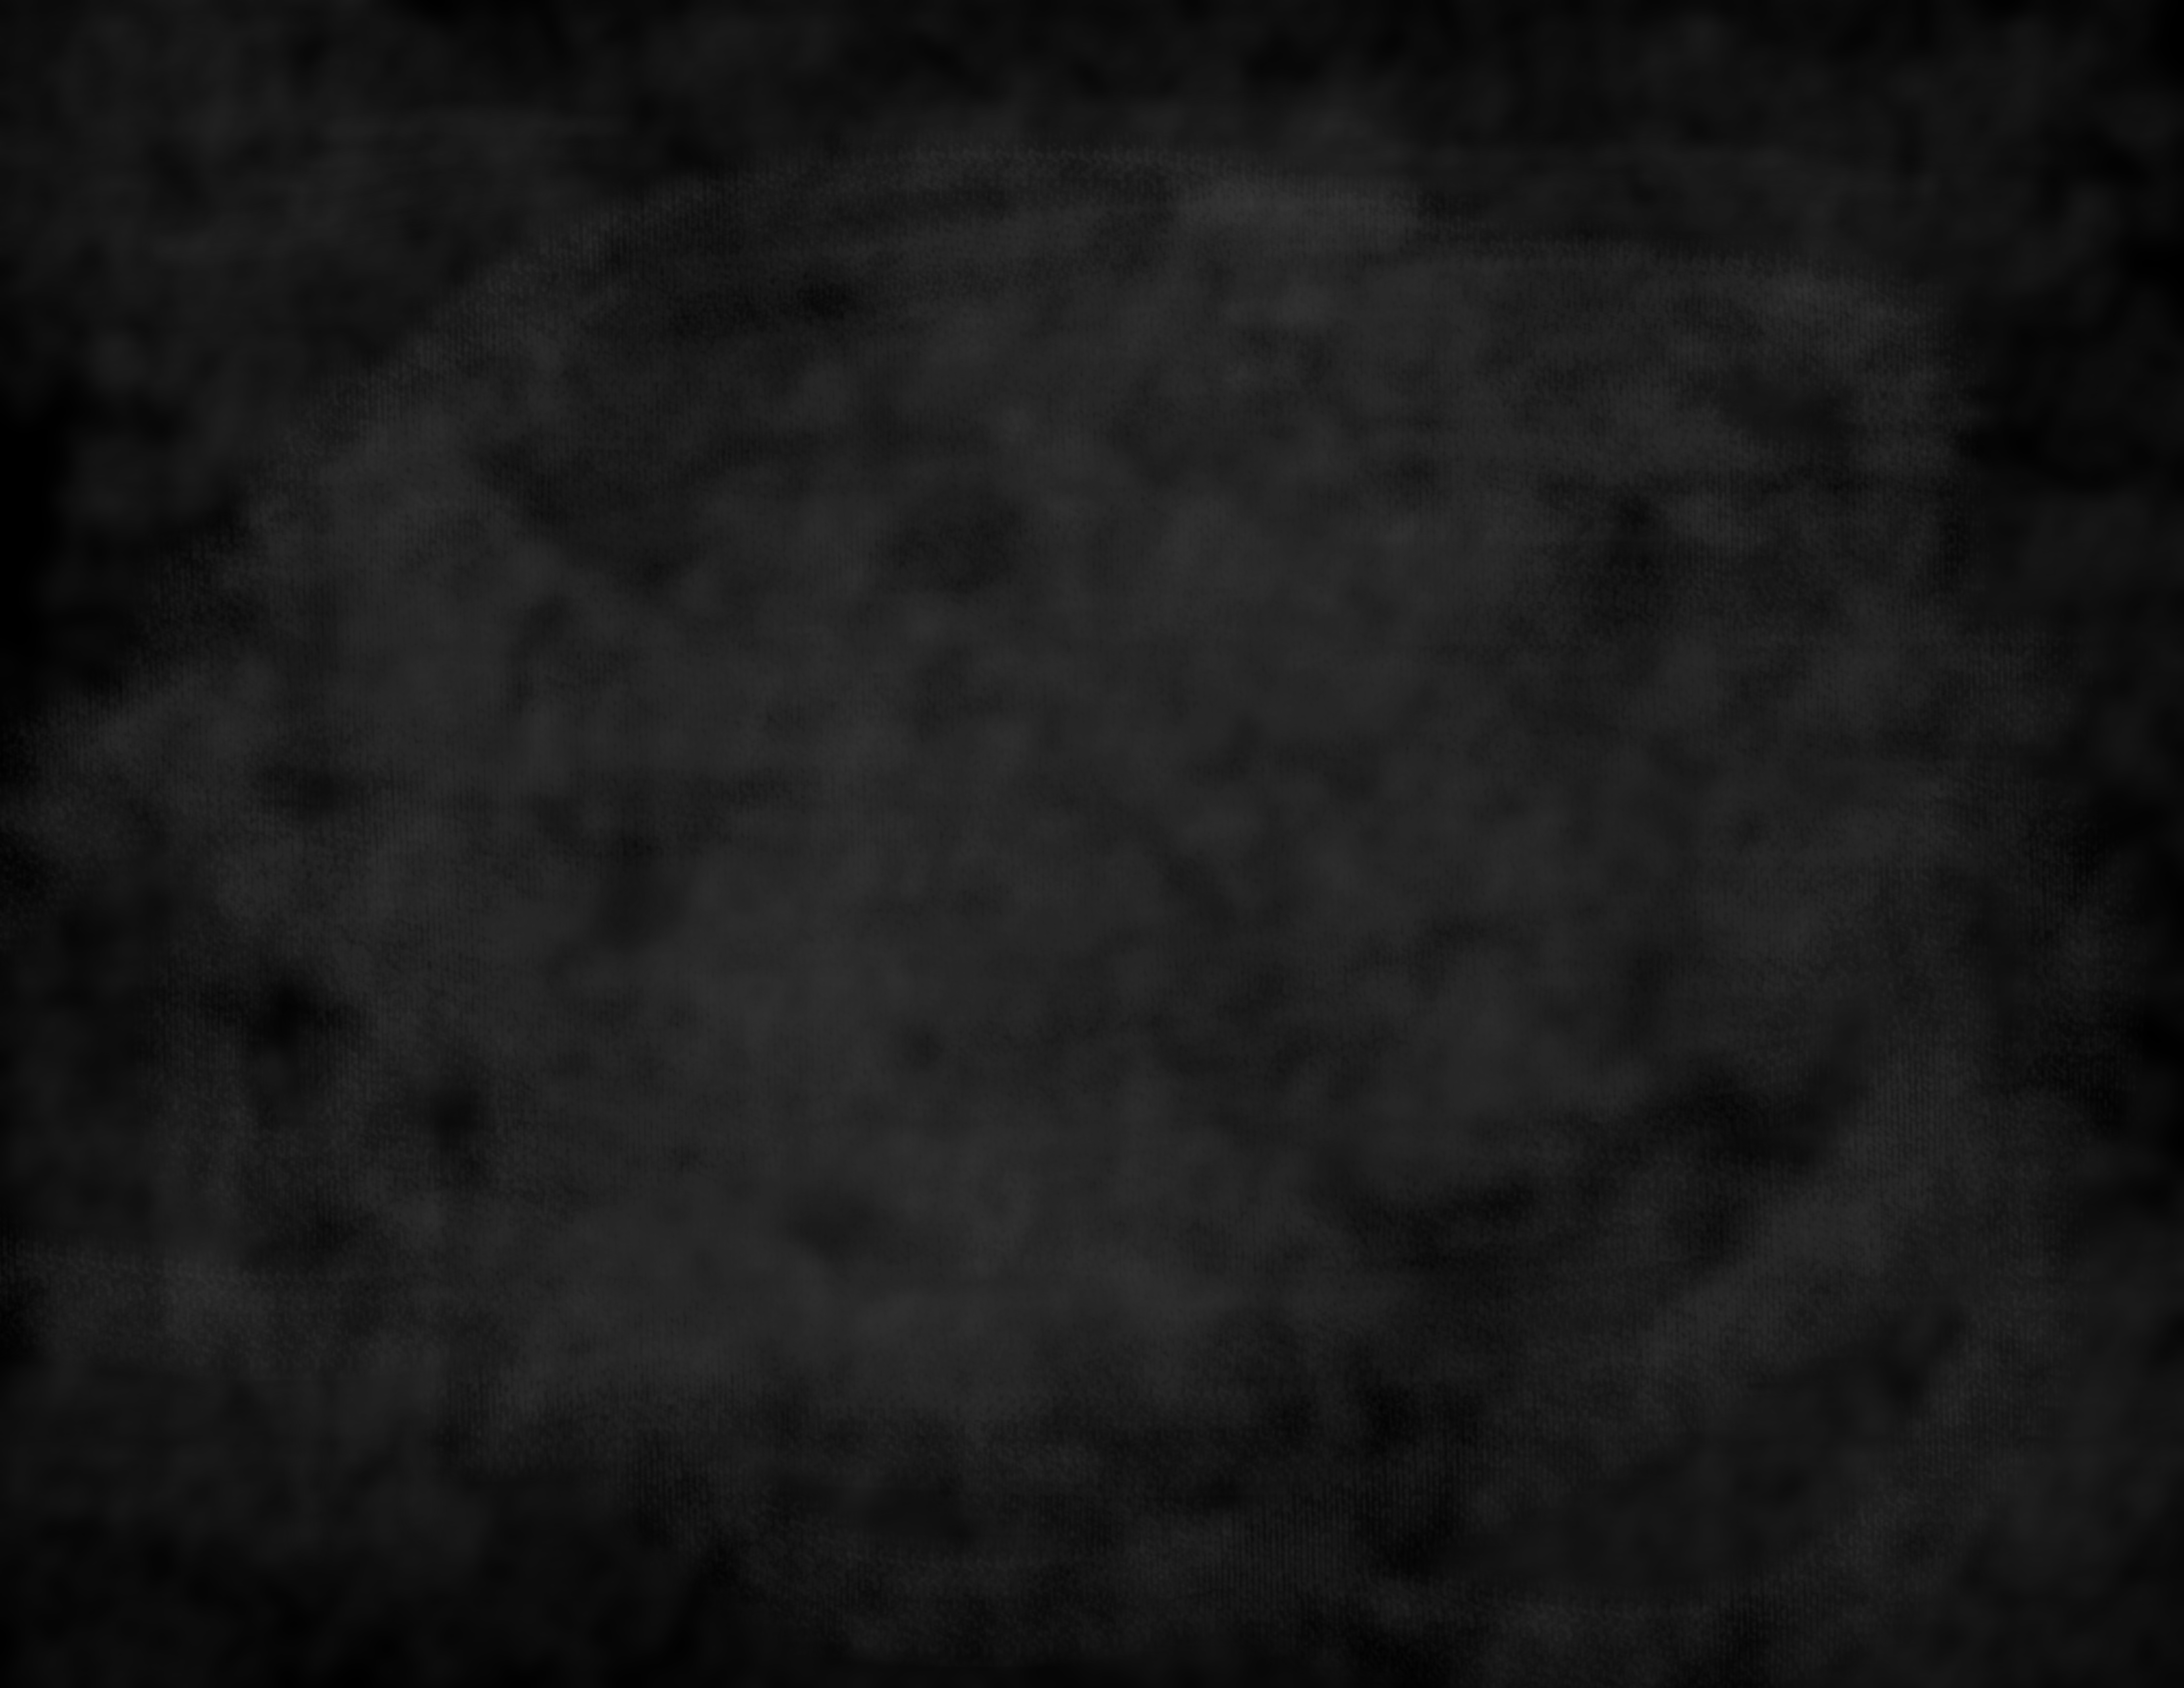 Free Chalkboard Background Freebies HD Wallpapers Download Free Images Wallpaper [wallpaper981.blogspot.com]